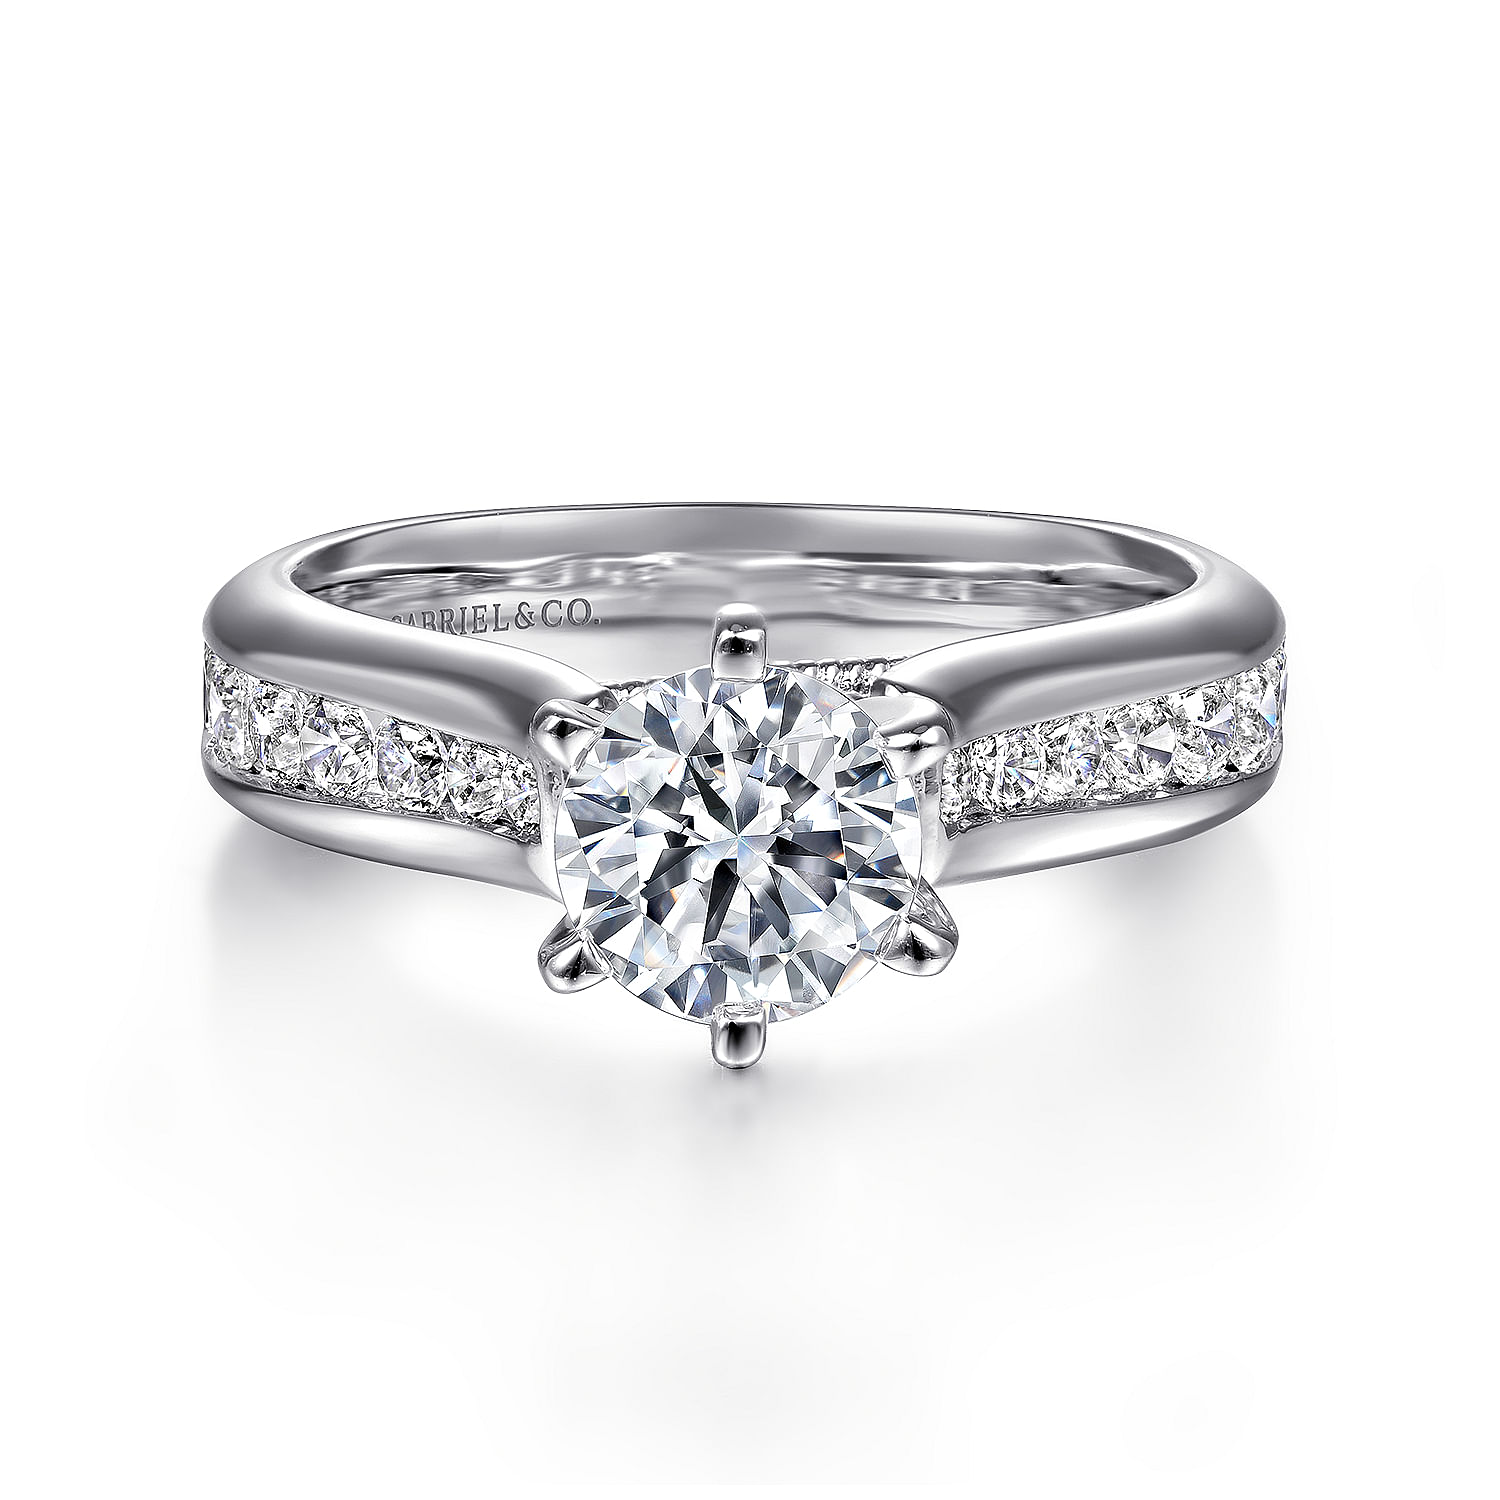 Jessica - 14K White Gold Round Diamond Channel Set Engagement Ring